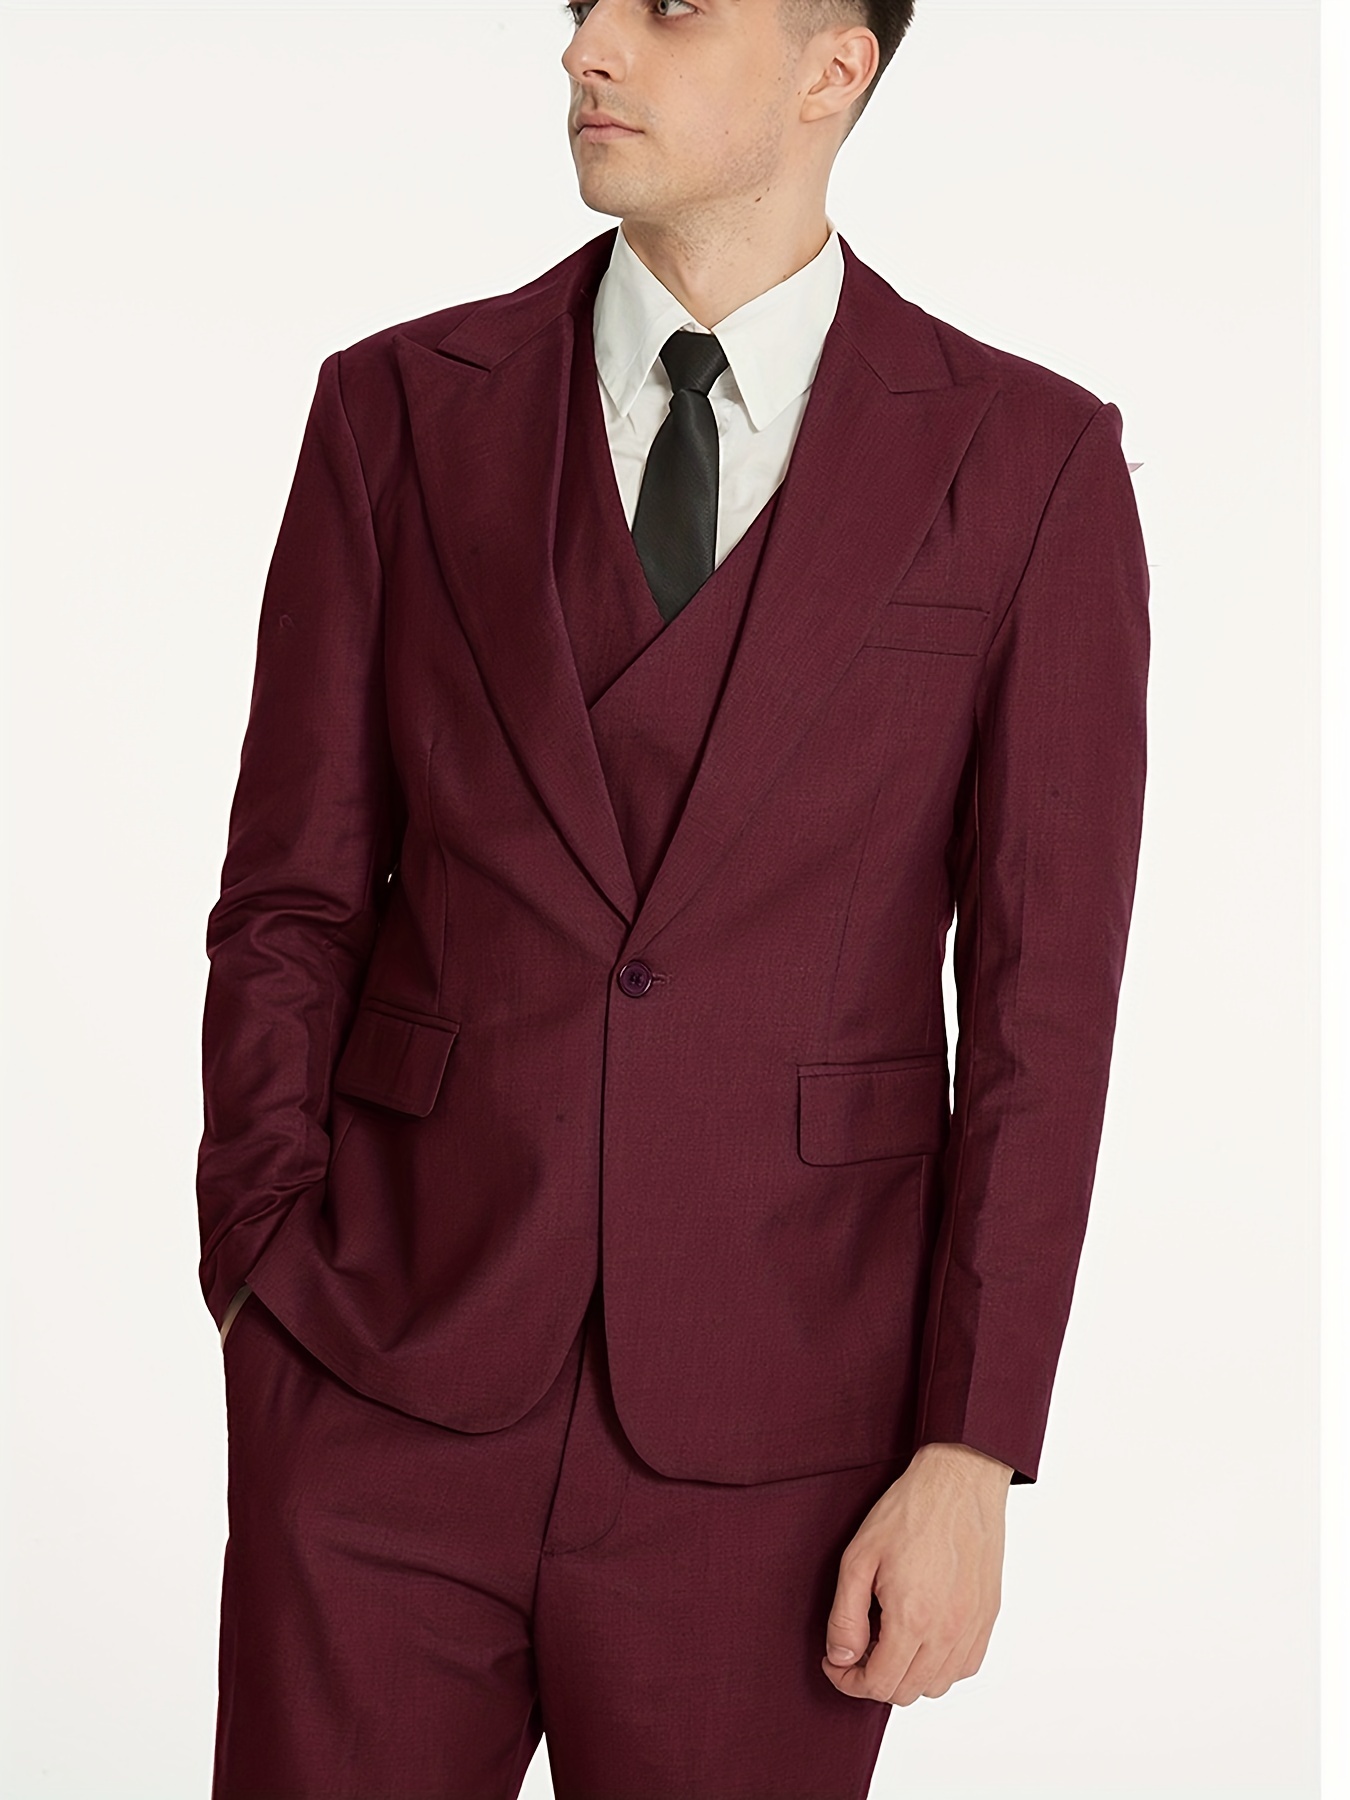 Men's 3 Piece Slim Fit Suit Set Double Breasted Solid Jacket Vest Pants  Business Suit Pink For Wedding Party